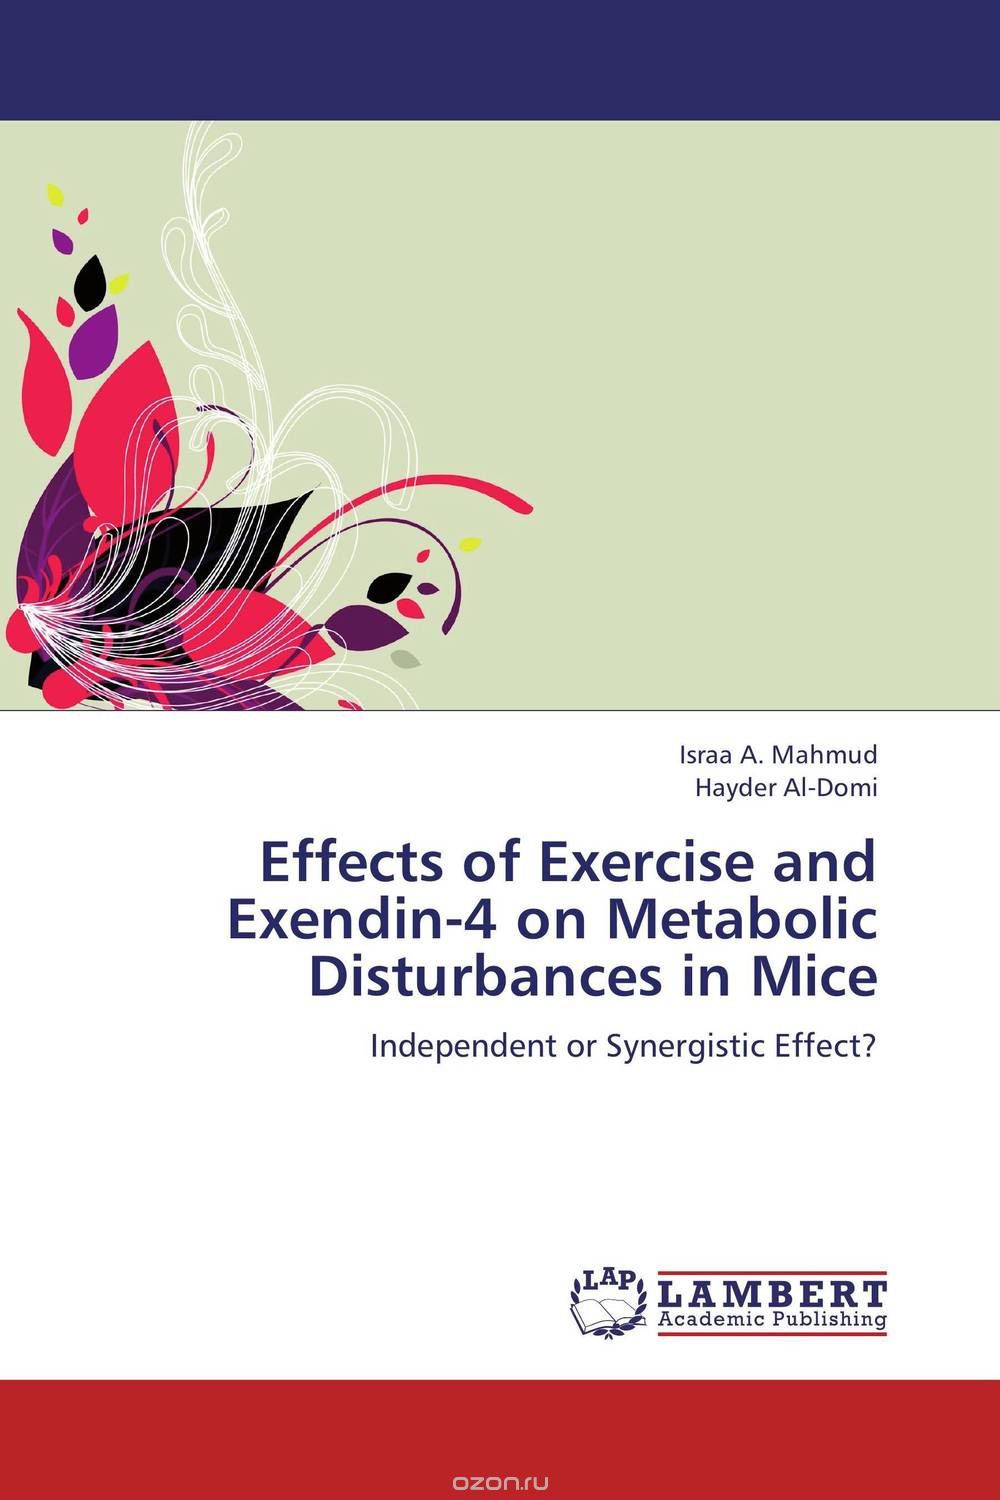 Скачать книгу "Effects of Exercise and Exendin-4 on Metabolic Disturbances in Mice"